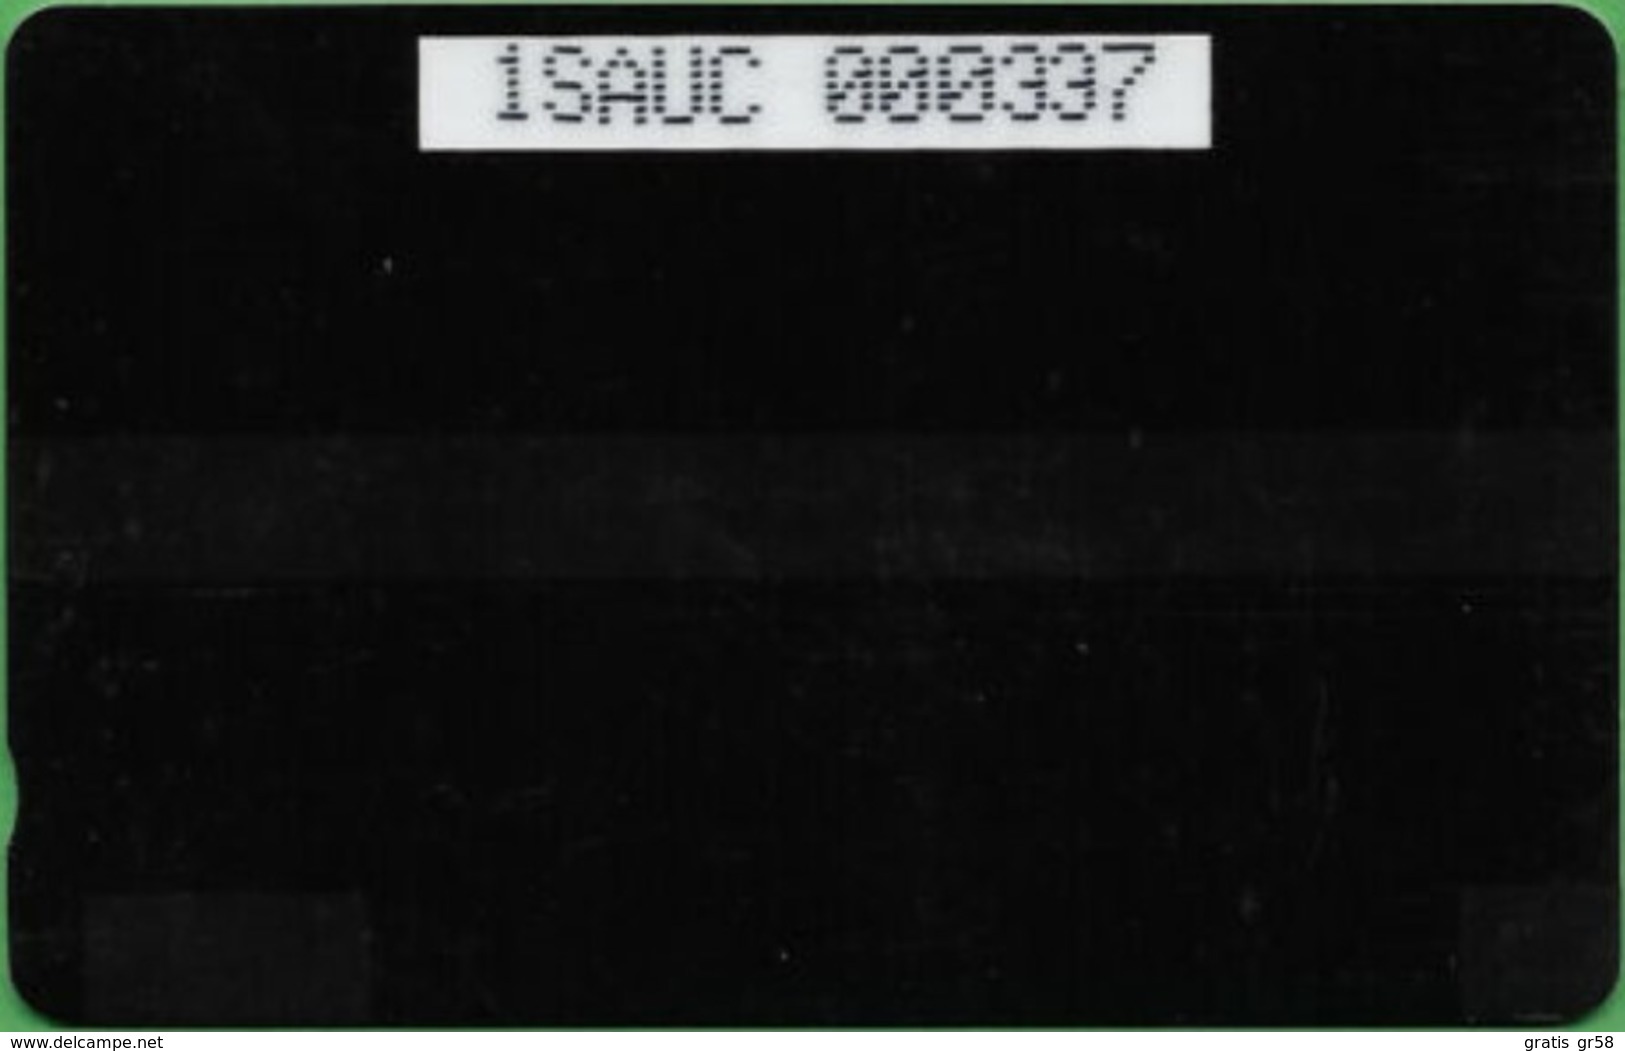 Saudi Arabia - SAU-O-03, GPT, Evaluation Card Type 2 Batch N. 2, 480U, 1SAUC, 400ex, 1993, Used - Saudi Arabia